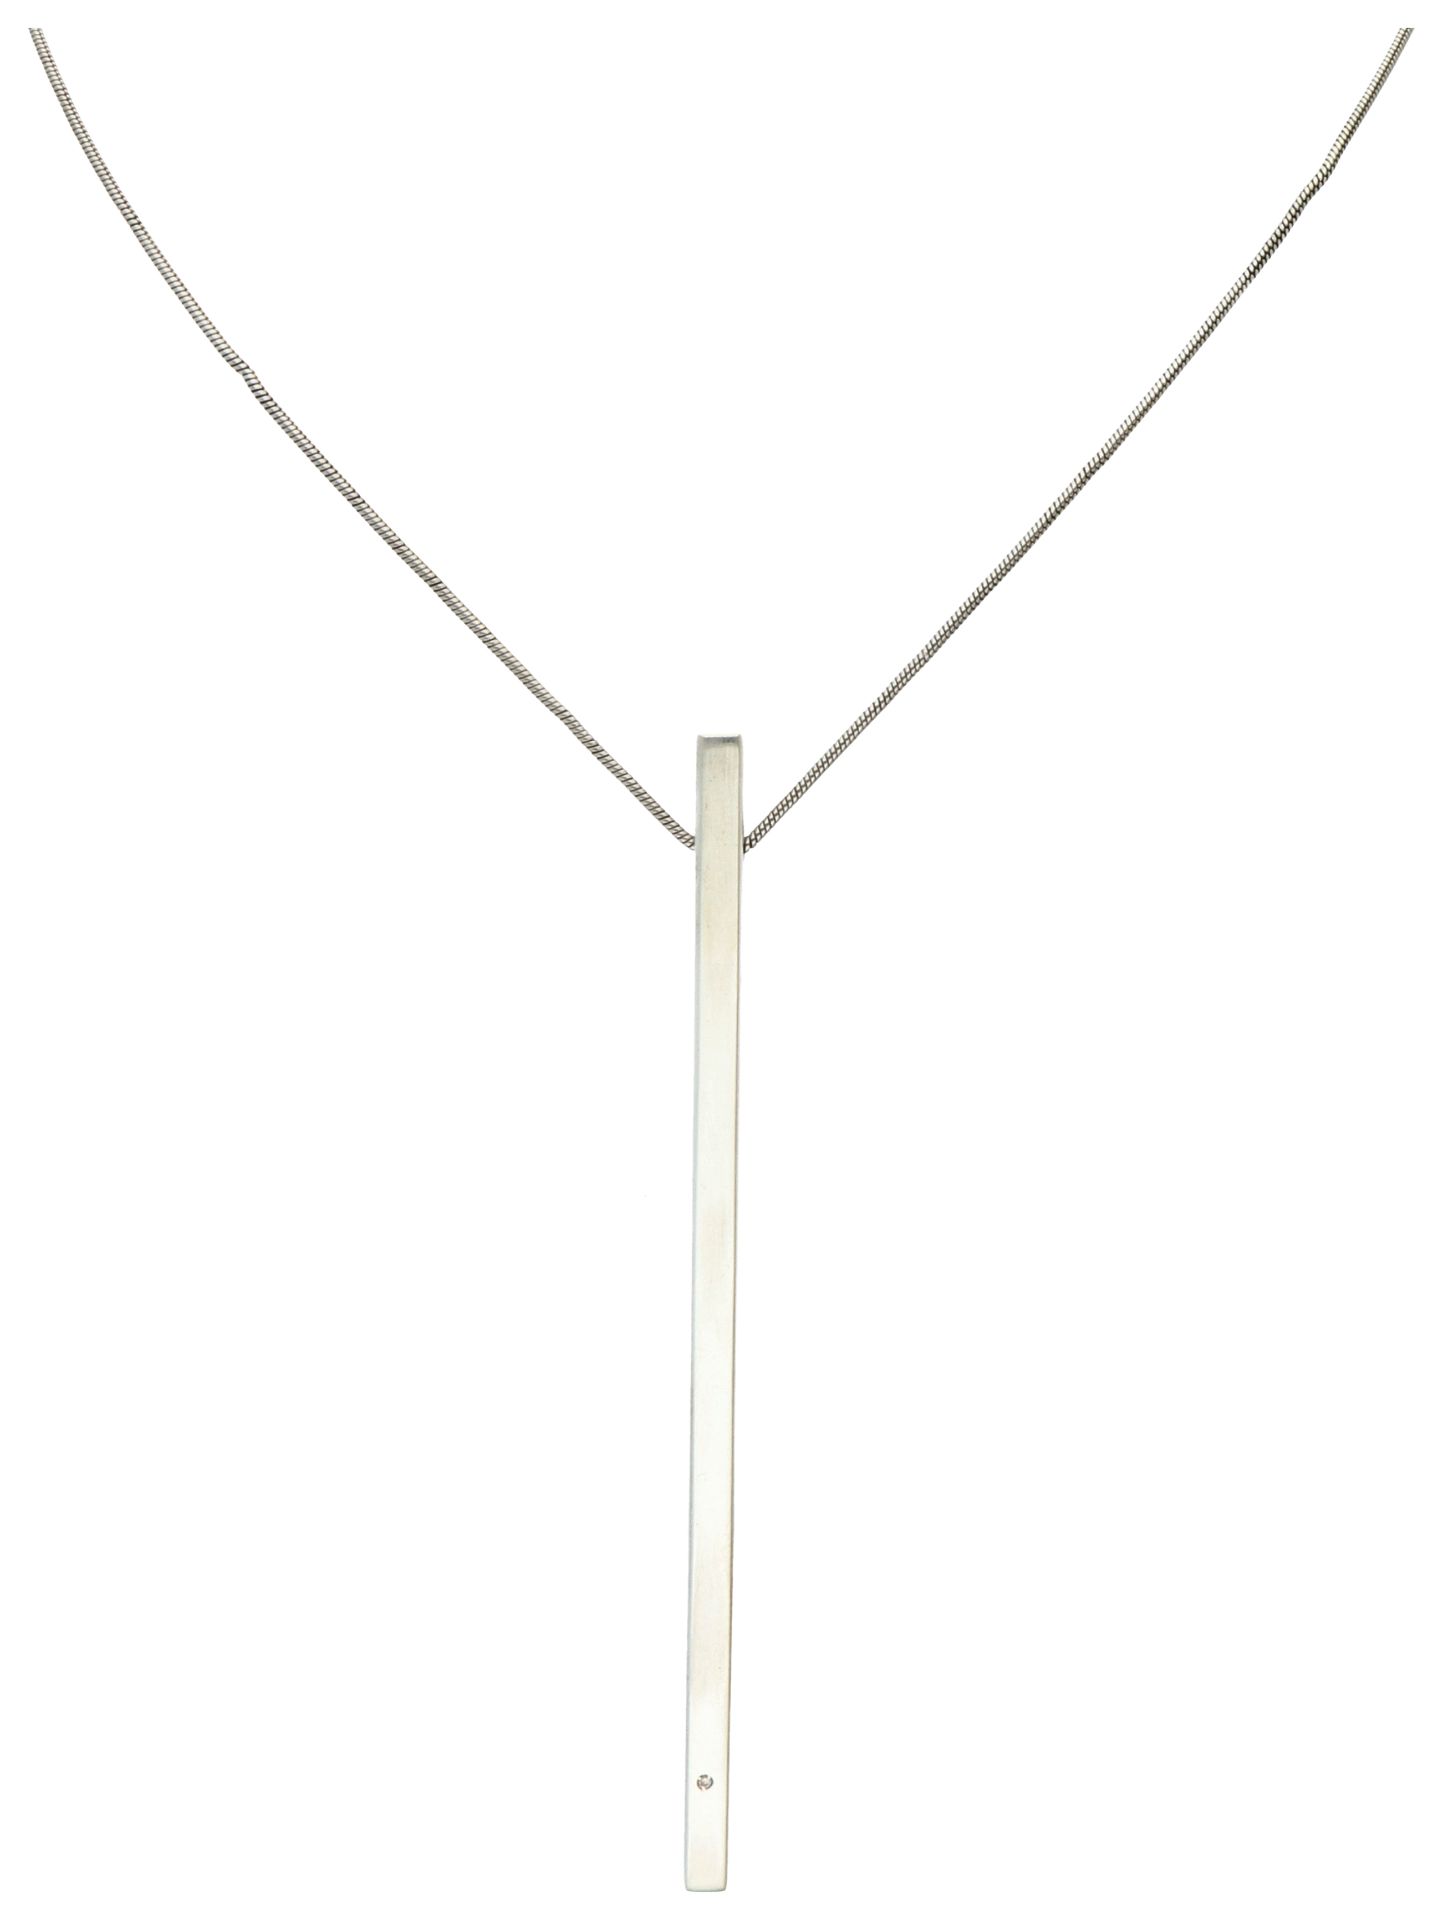 No Reserve - Pianegonda Sterling silver snake necklace with bar pendant.